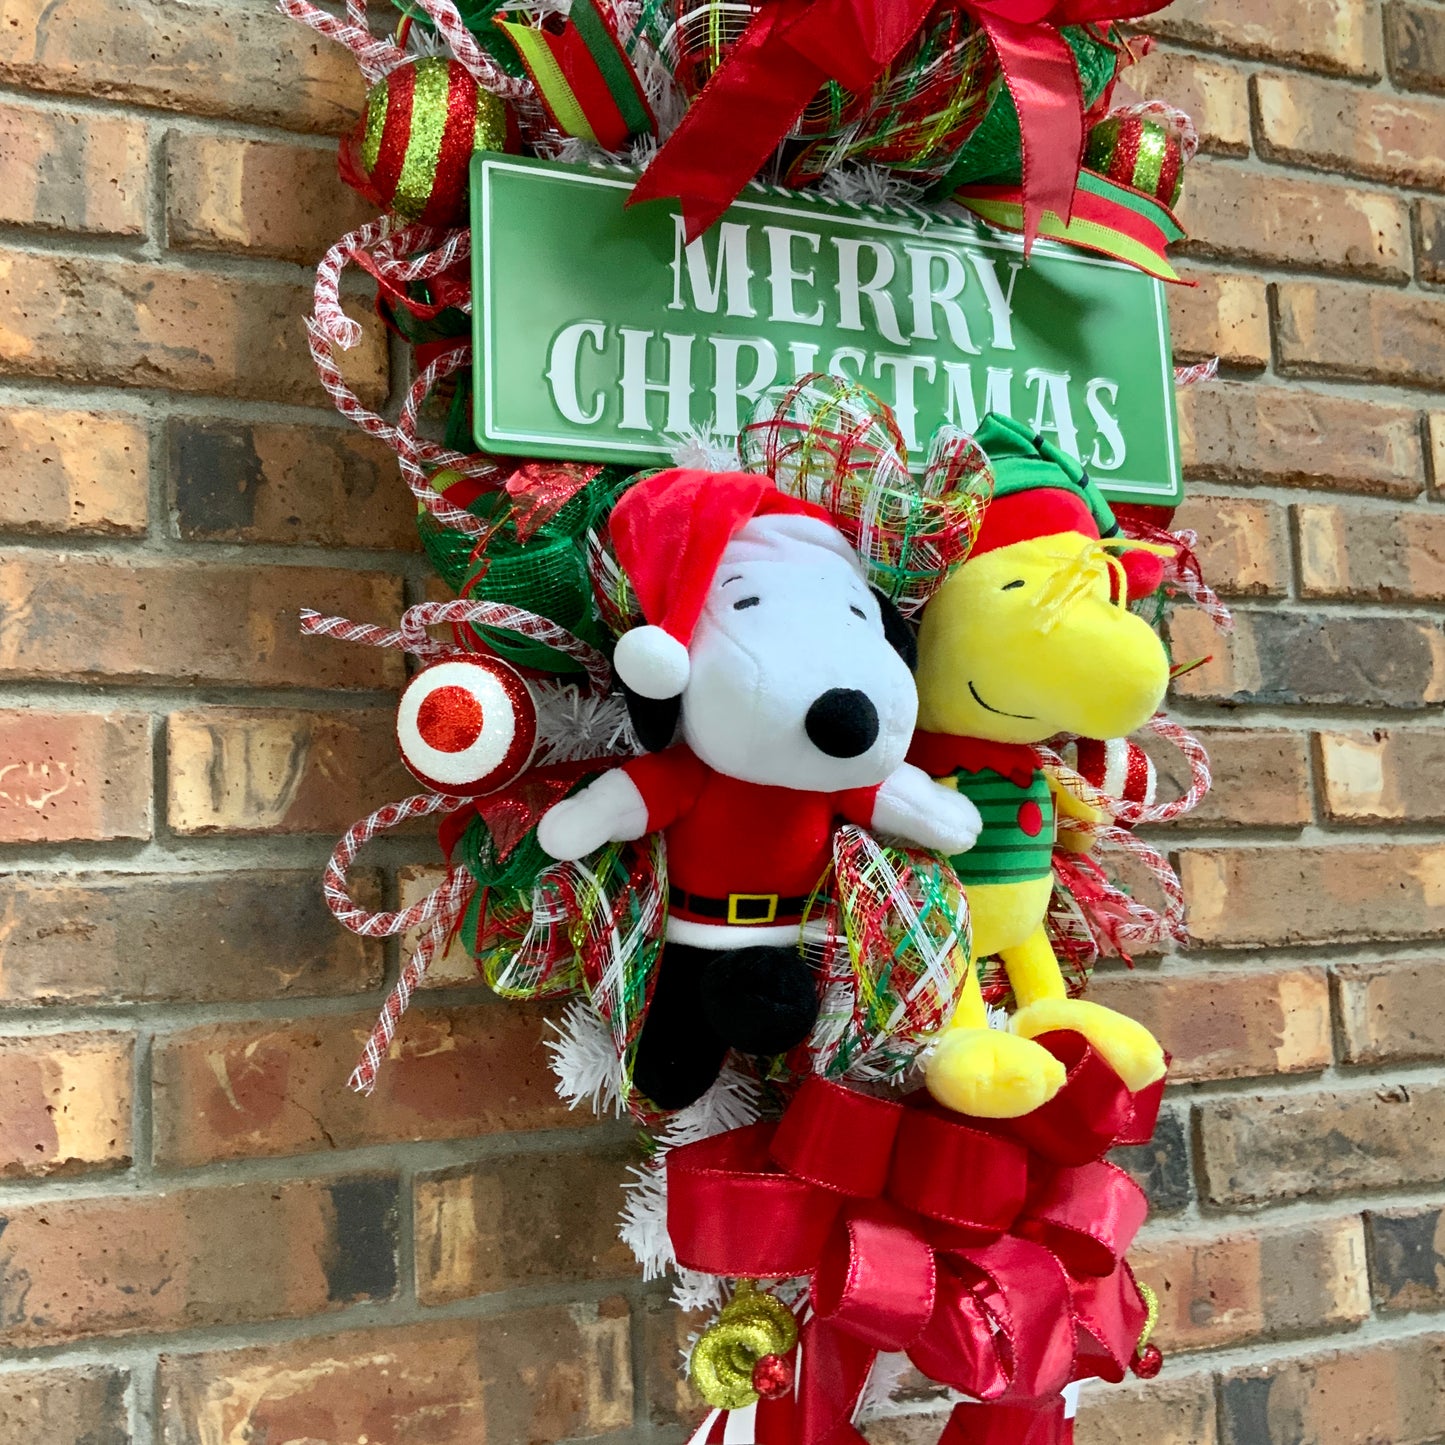 Christmas Snoopy Wreath, Christmas Snoopy Swag, Large Christmas Wreath, Christmas Peanuts Decor, Snoopy and Woodstock Decor, Snoopy Merry Christmas